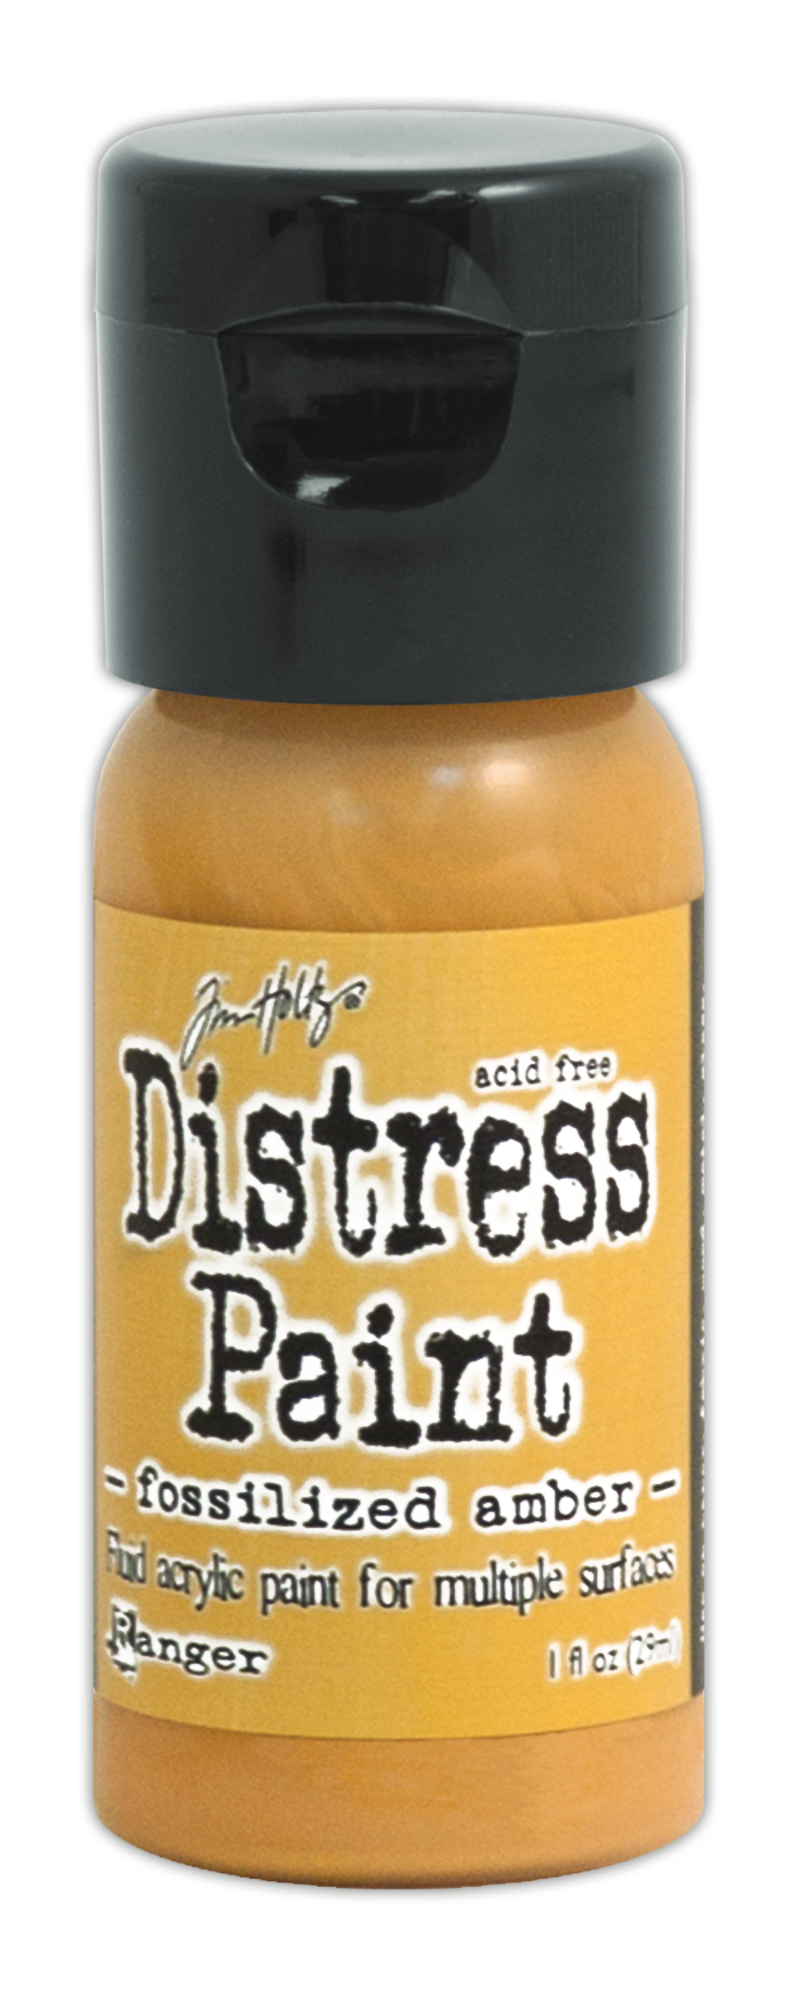 Tim Holtz Distress Paint Flip Top 29ml - Fossilized Amber